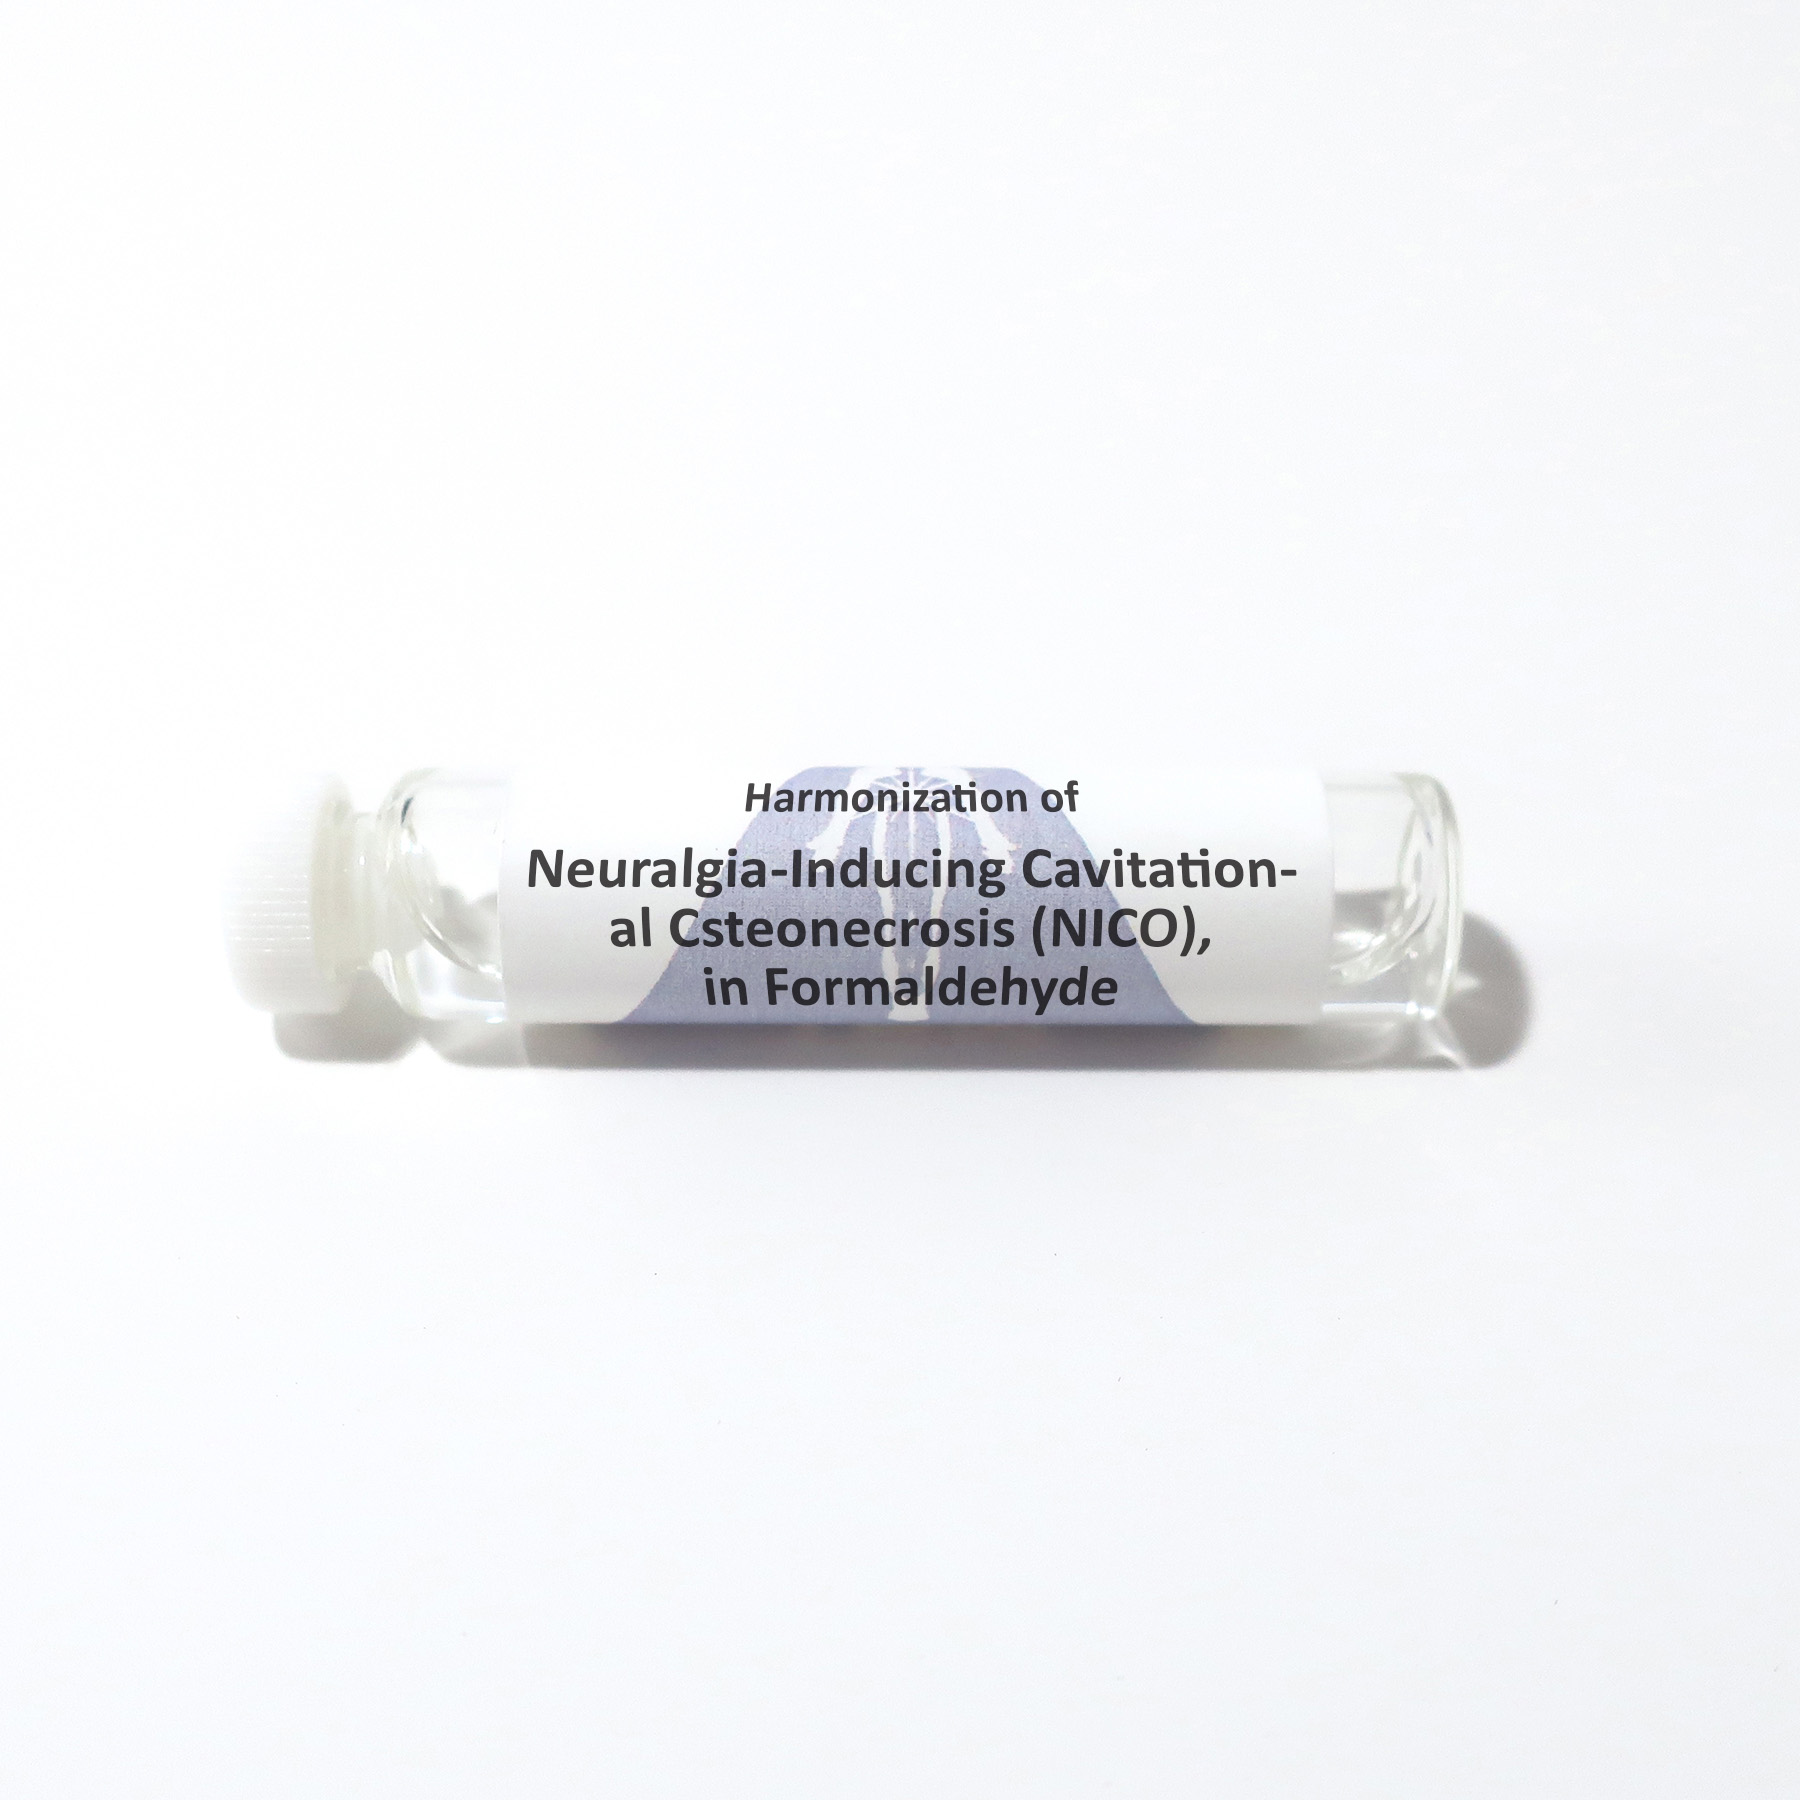 Neuralgia-Inducing Cavitational Osteonecrosis (NICO), in Formaldehyde